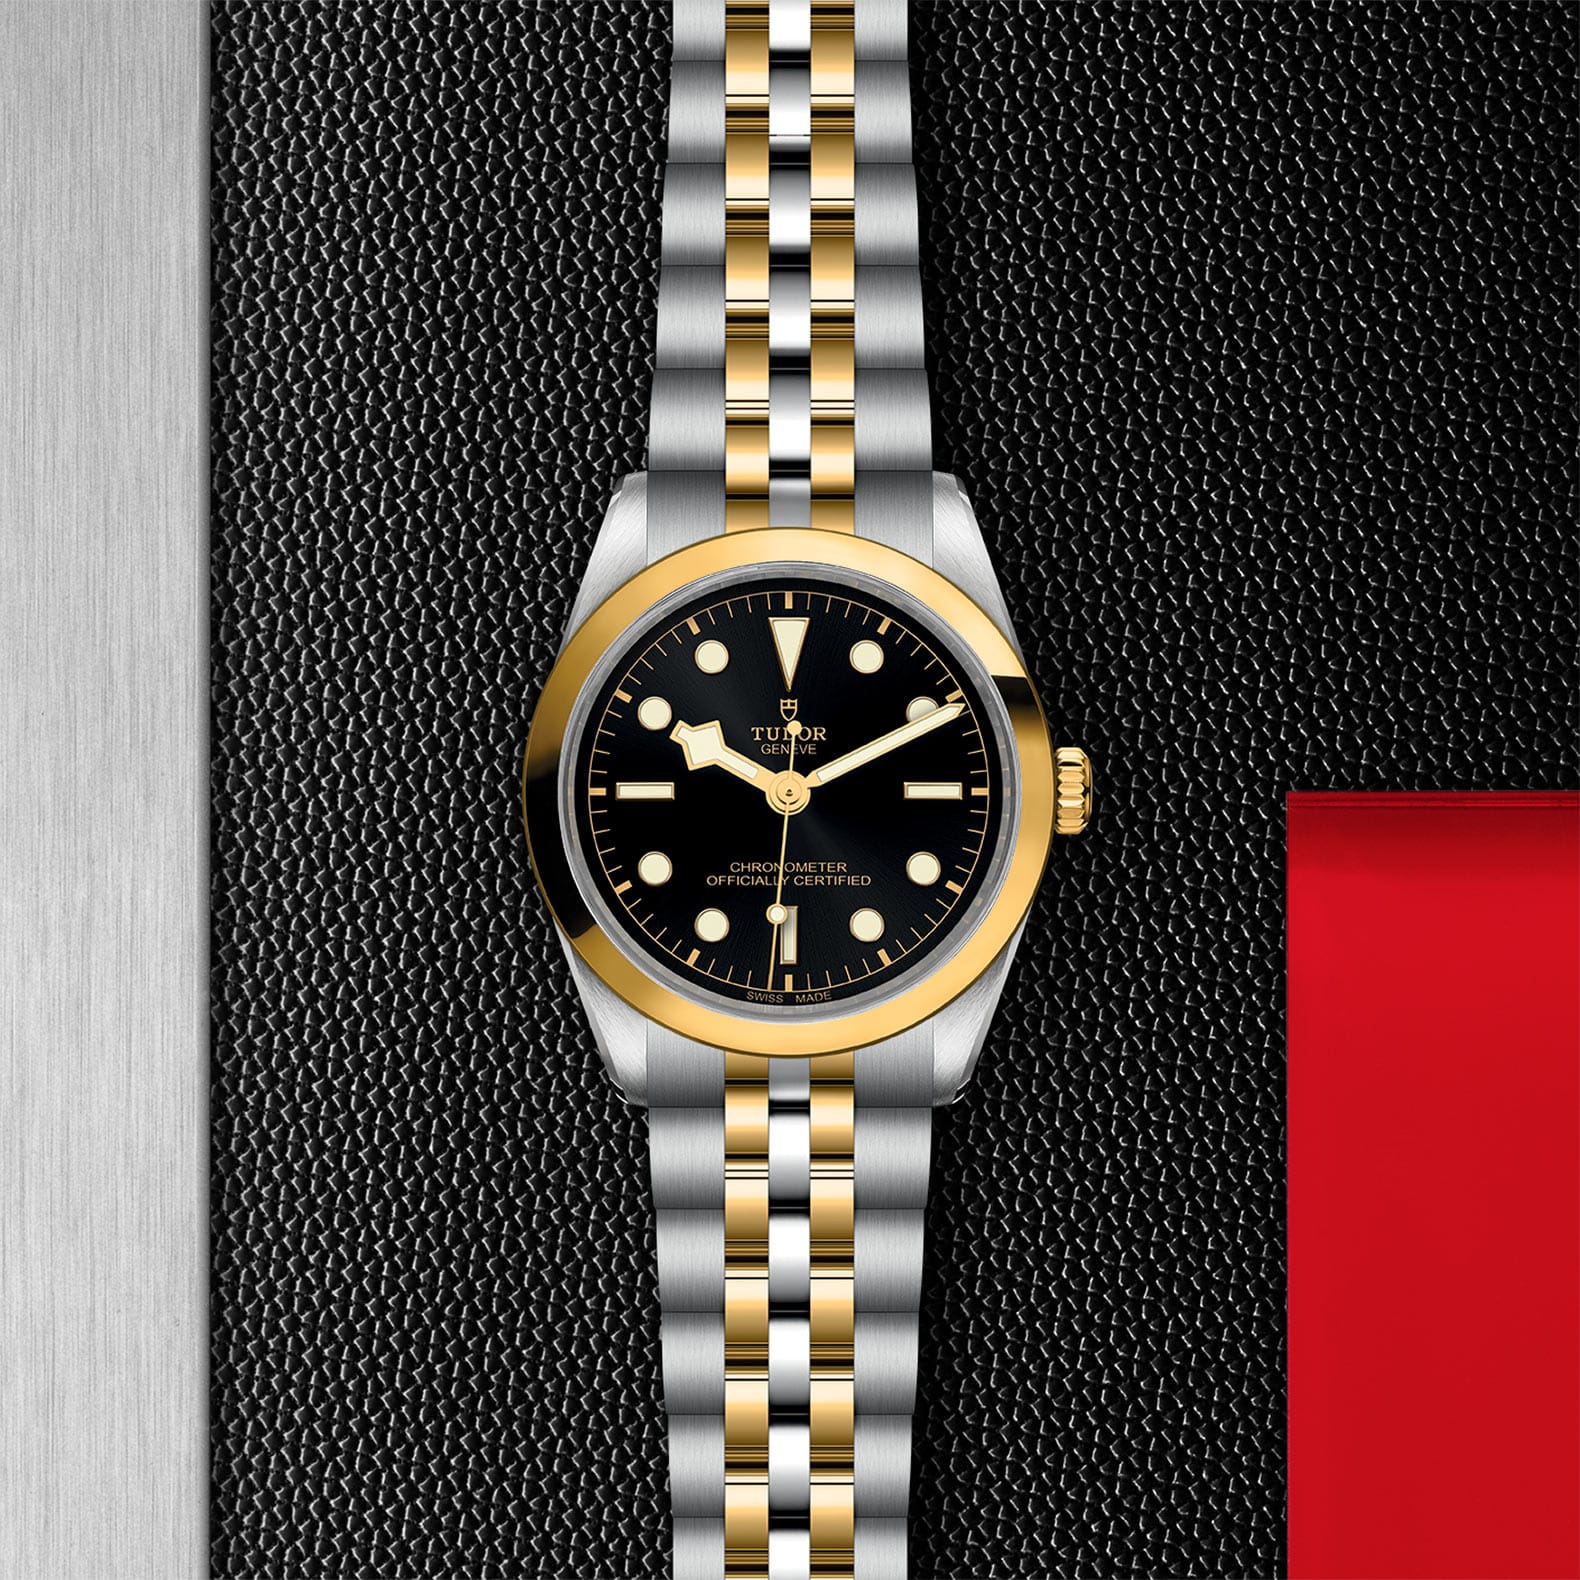 Tudor Watch Assets M79643 0001 Instore Flatlay